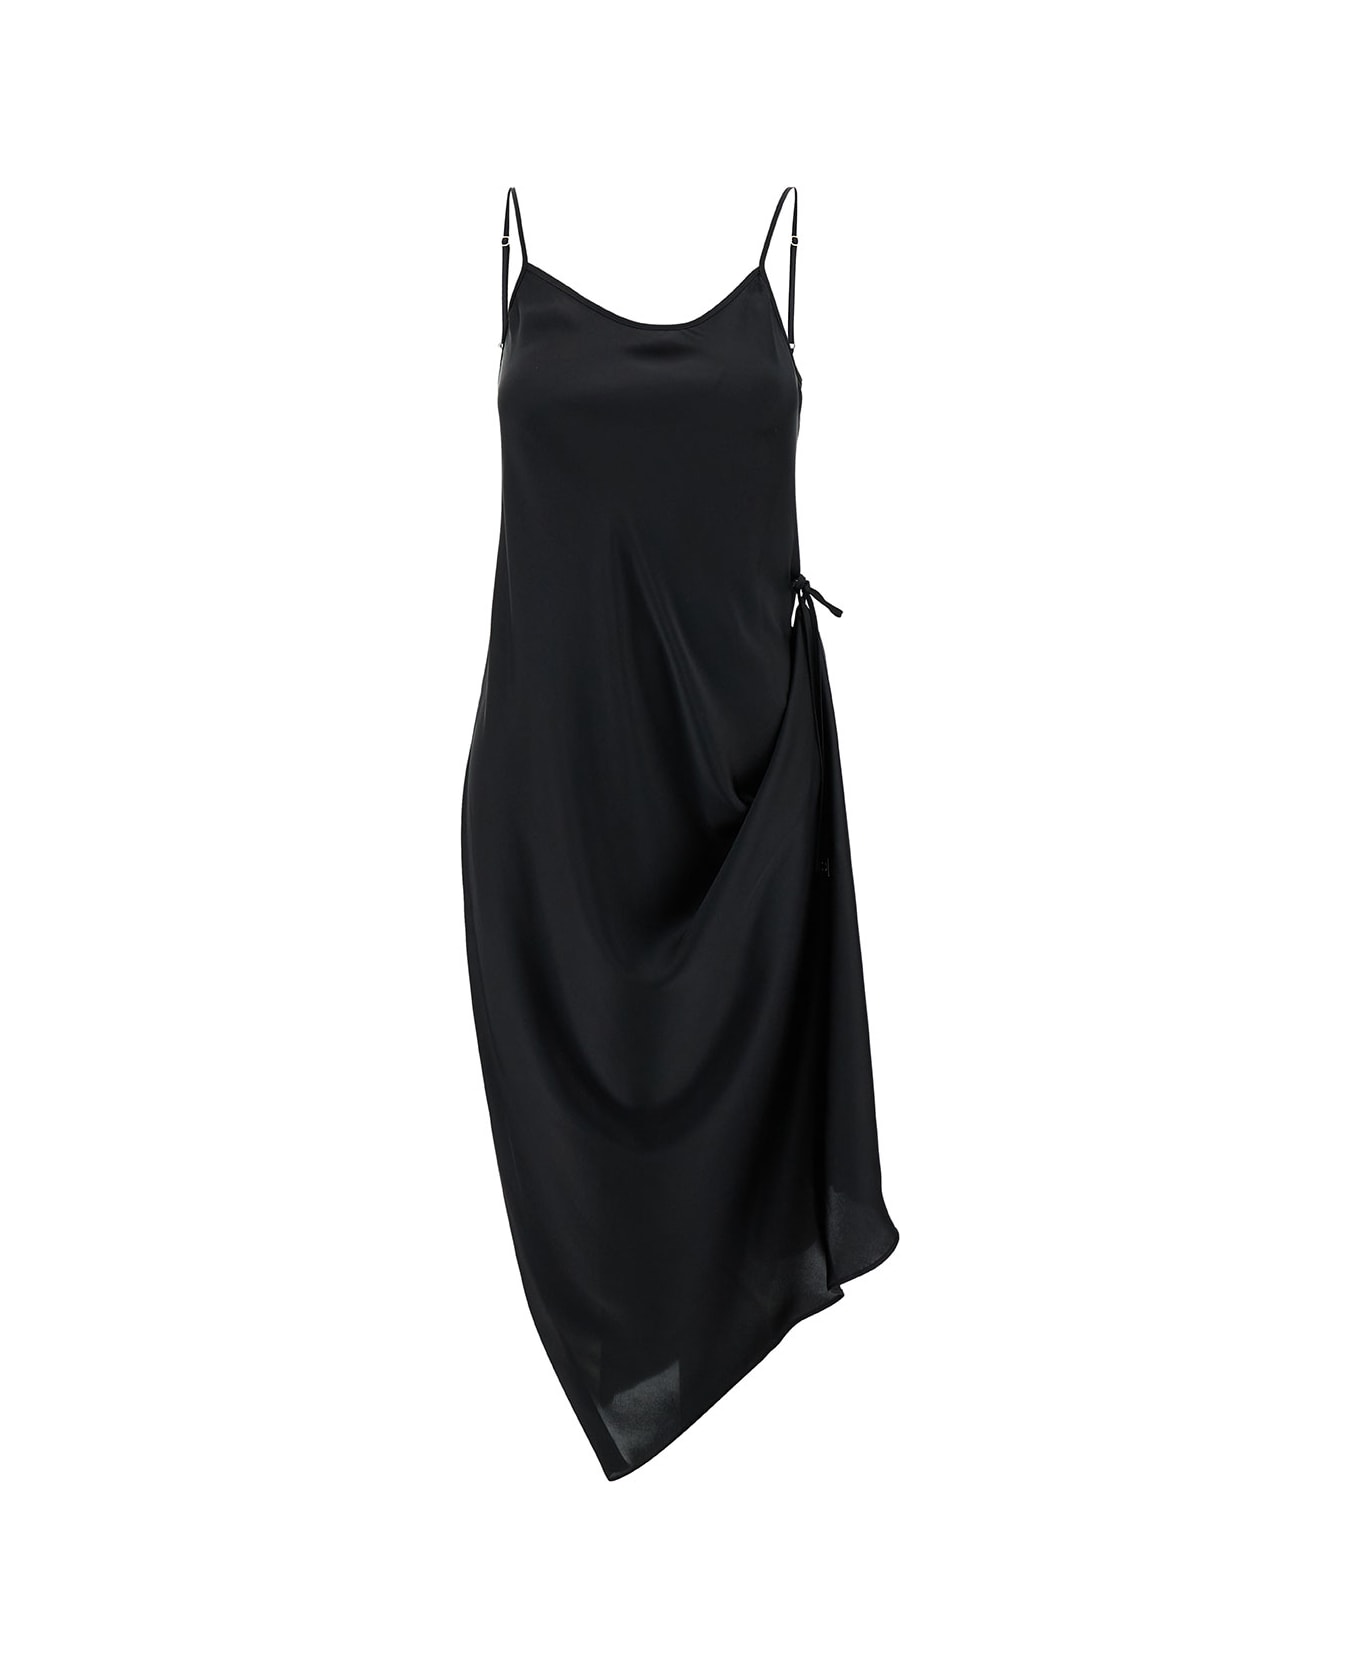 Low Classic Black Midi Slip Dress With Drawstring In Light-weight Fabric Woman - Black